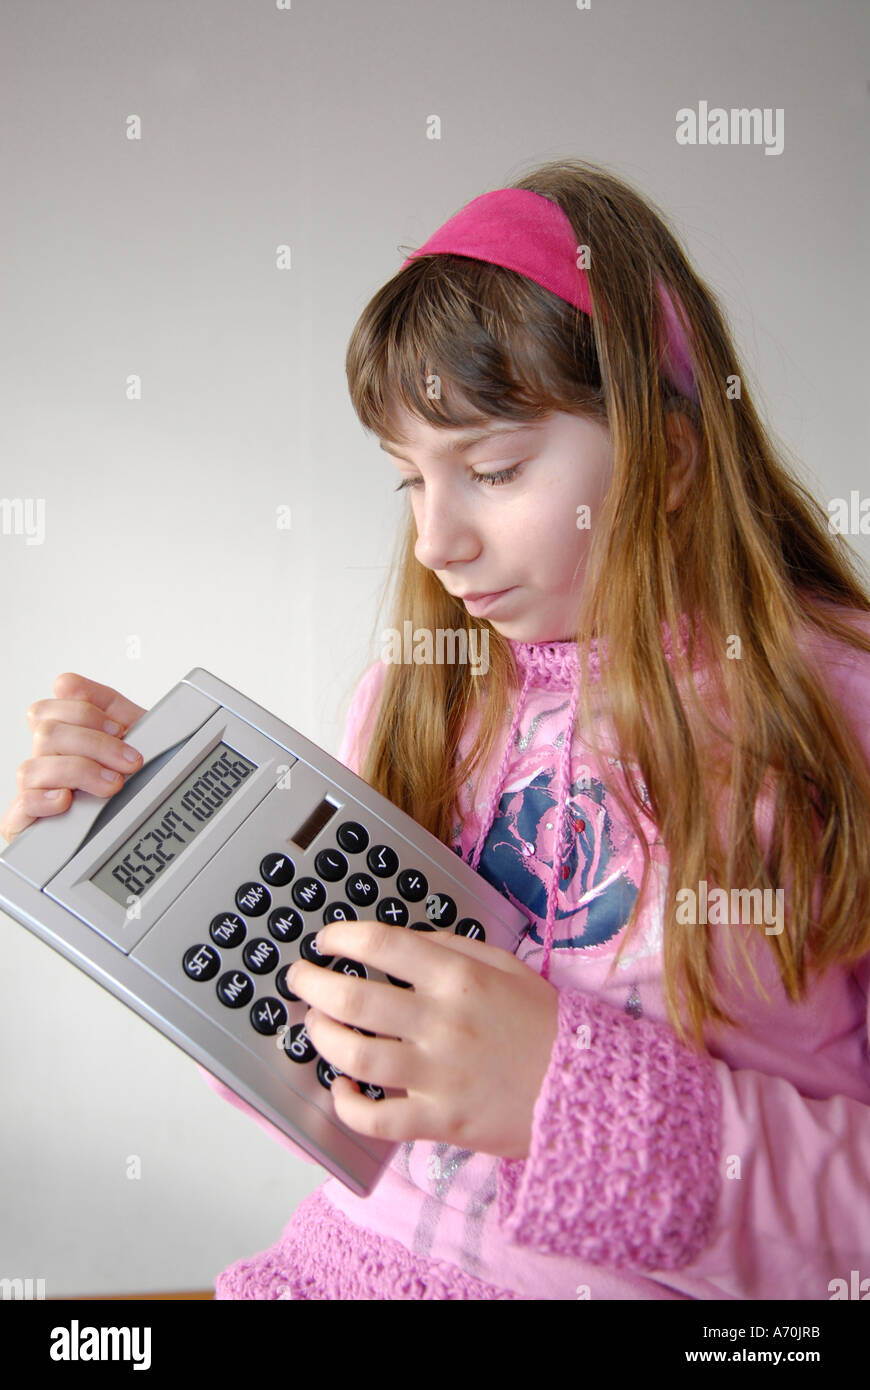 Girl with pocket calculator Stock Photo - Alamy